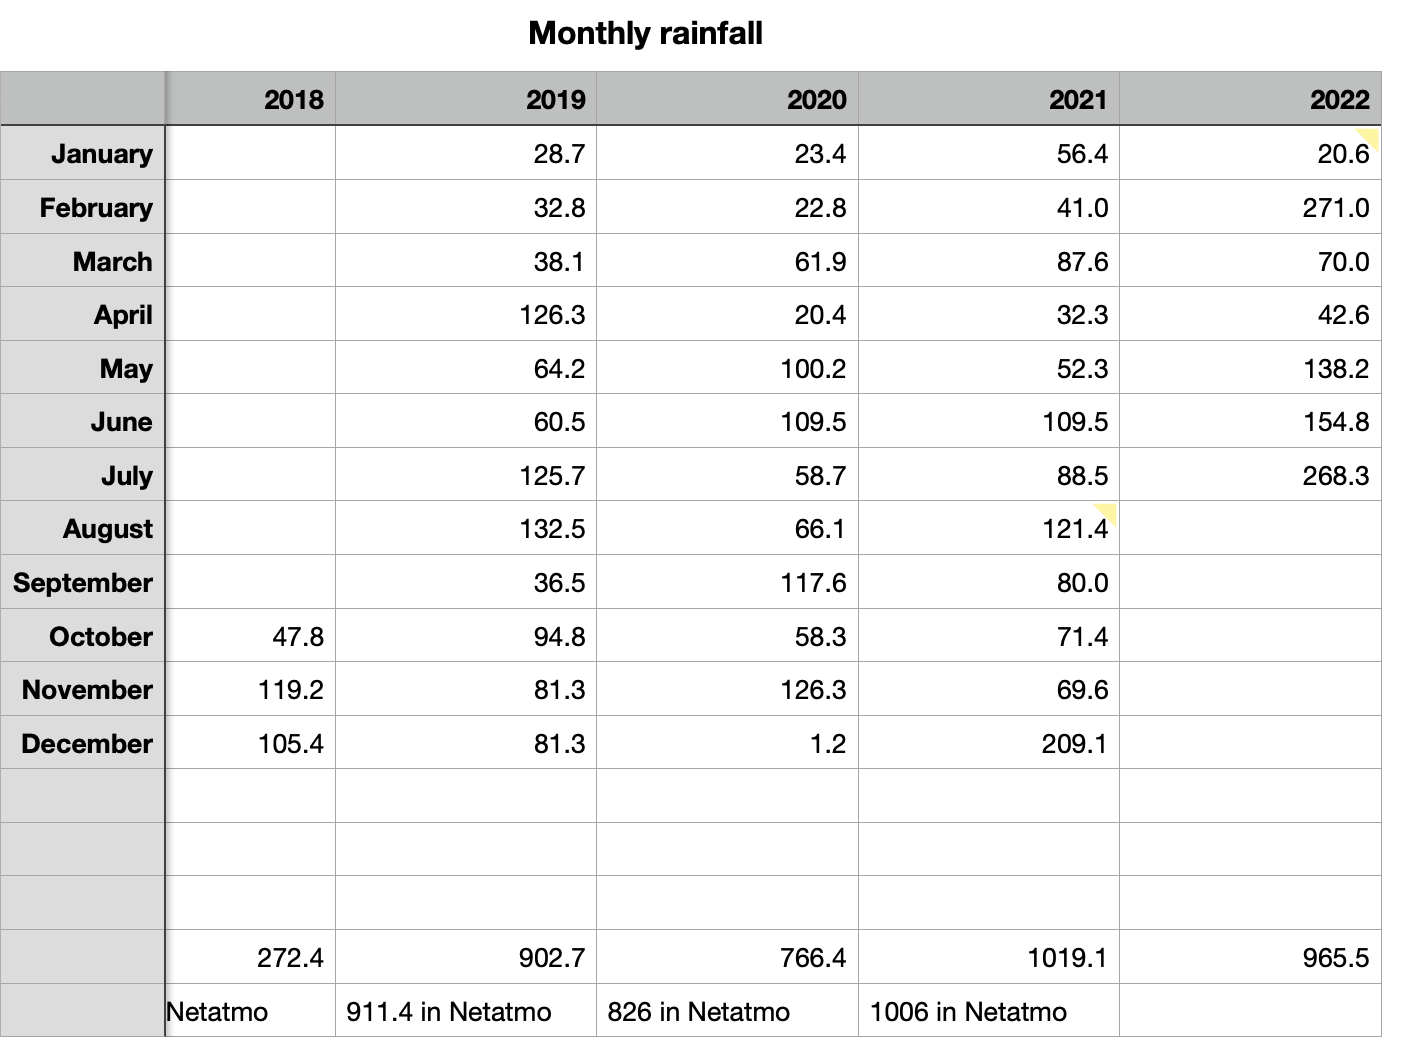 Rainfall chart for the last few years. 